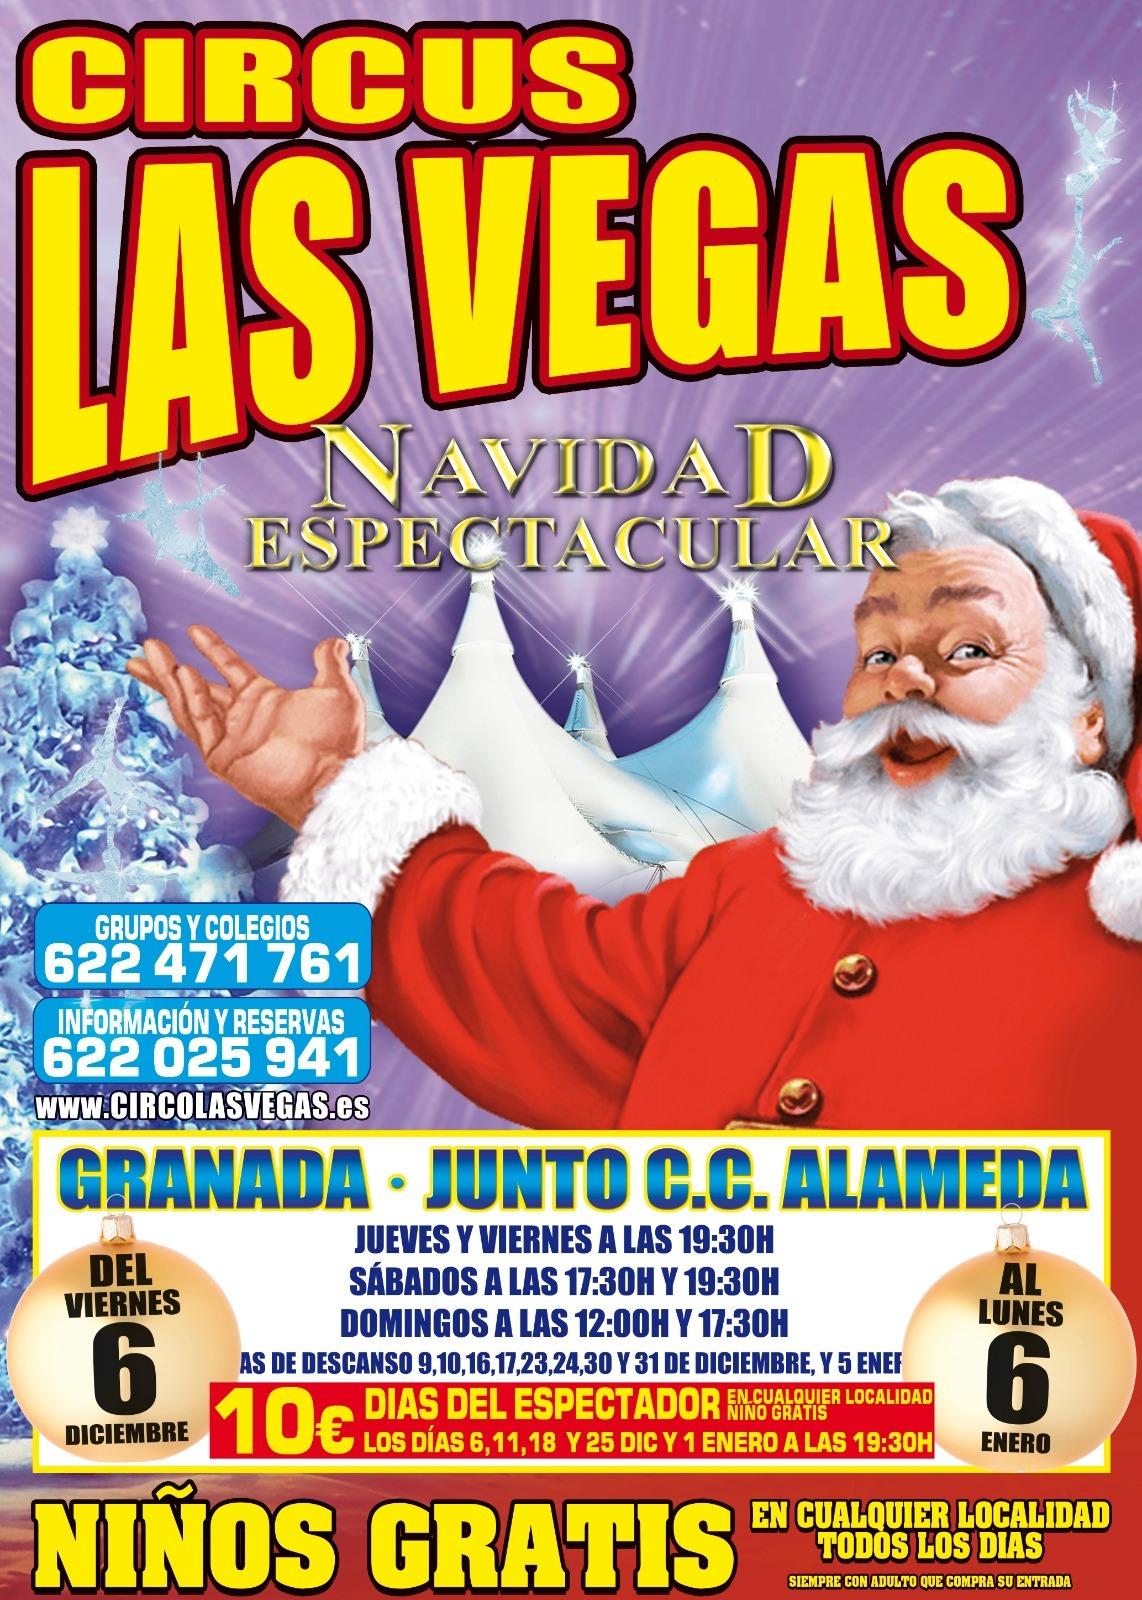 Circus Las Vegas en Granada